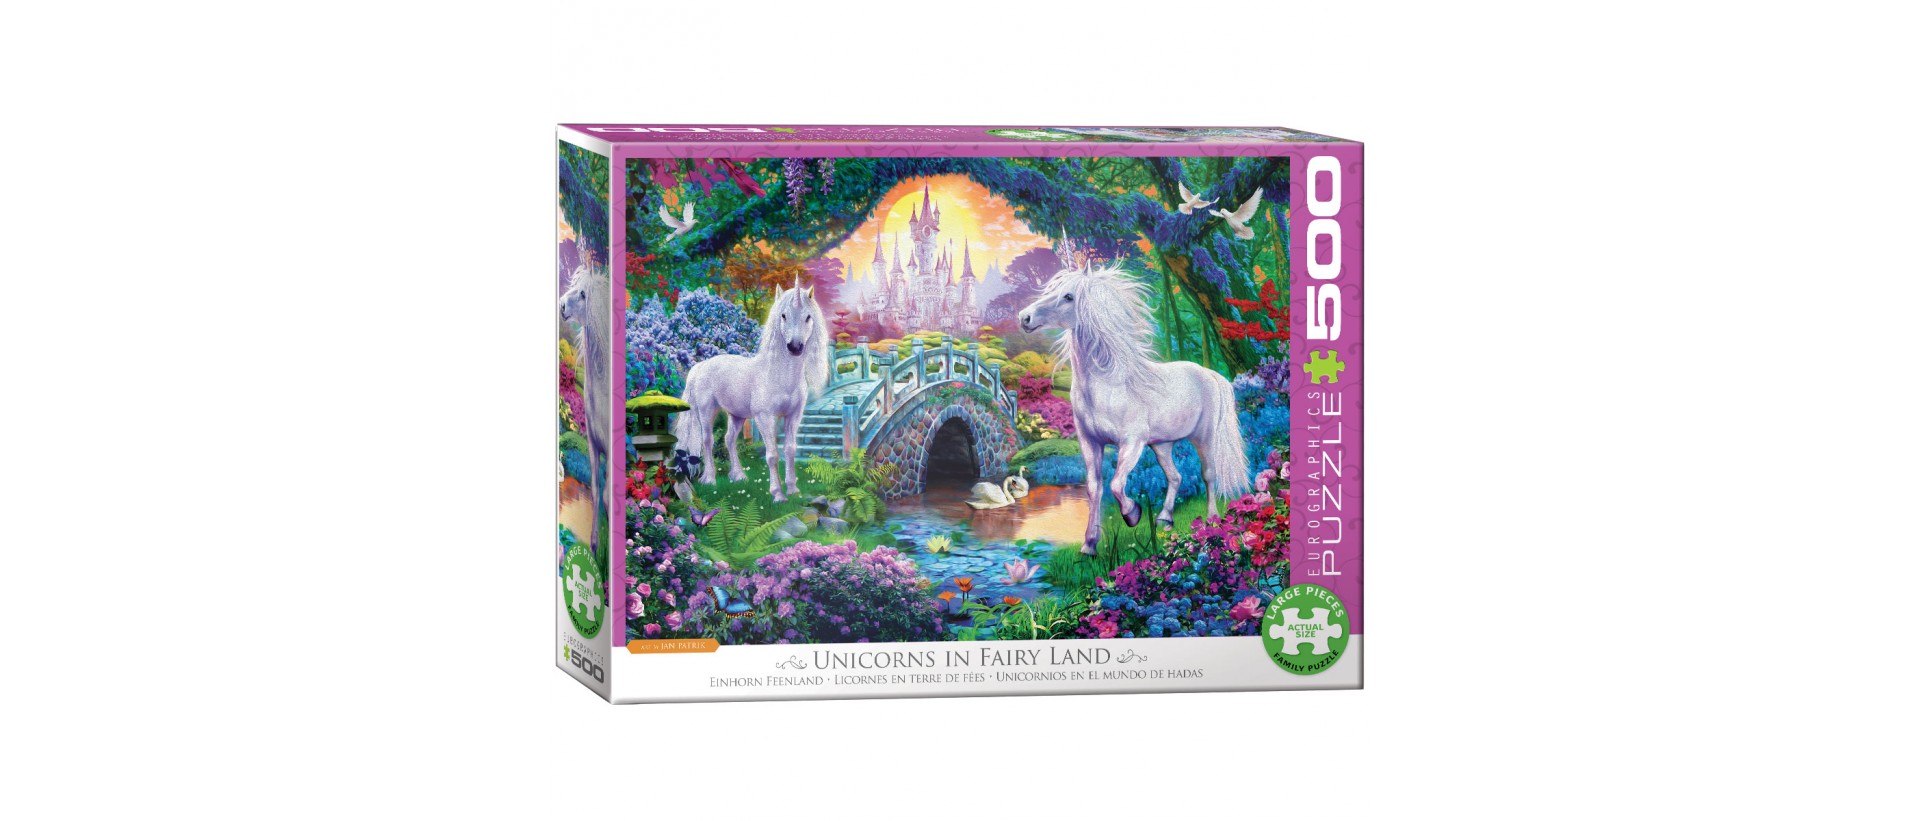 Unicorns in Fairy Land - Puzzle Eurographics 6500-5363